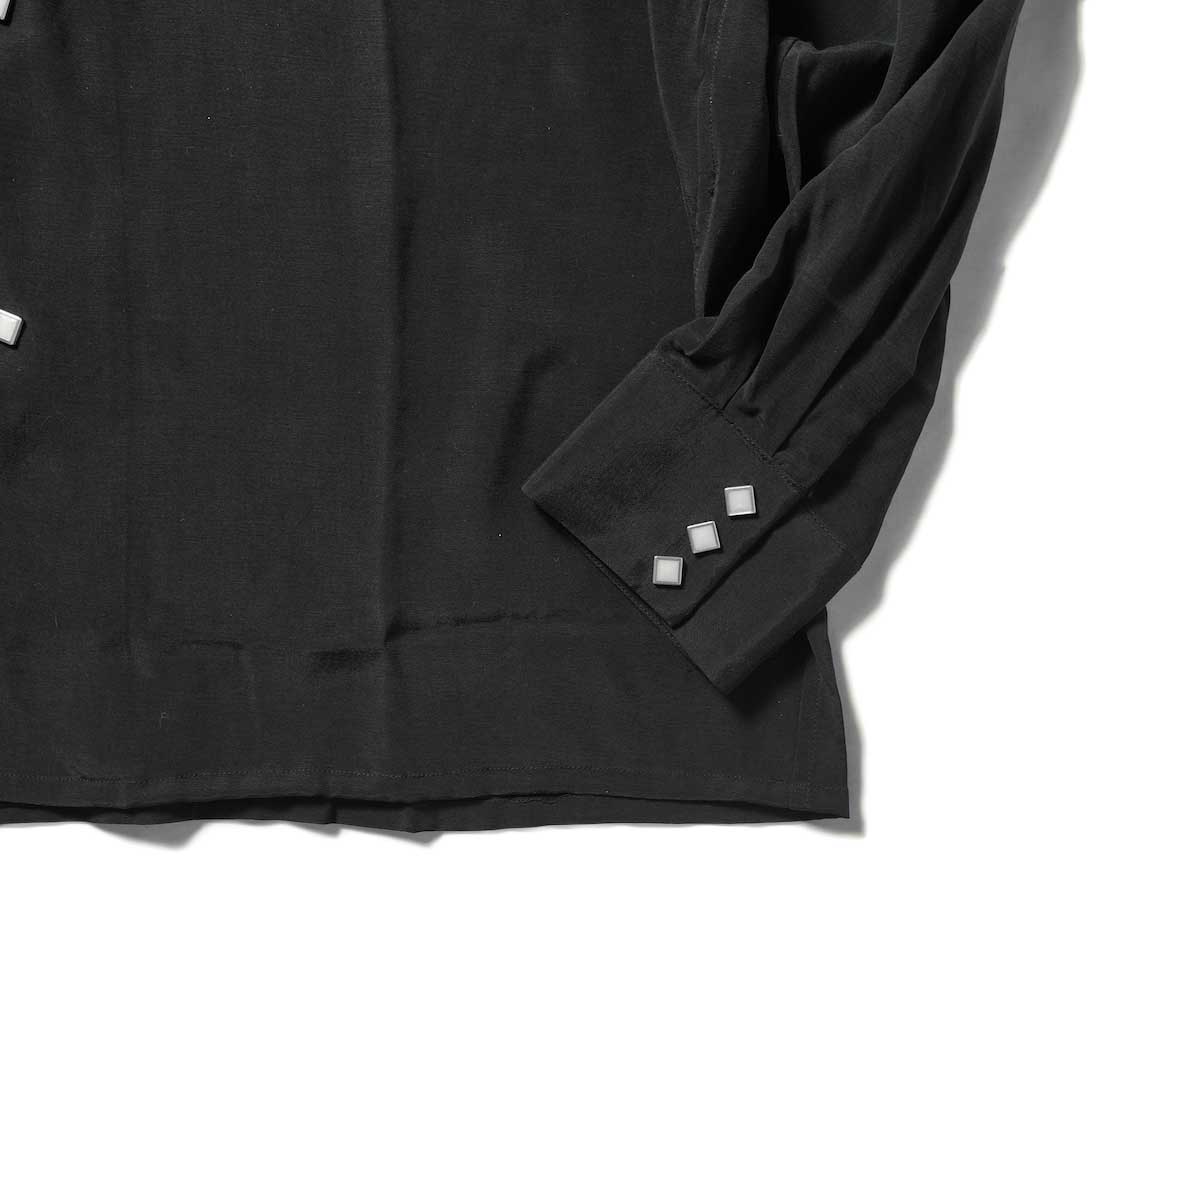 Needles / COWBOY CLASSIC SHIRT - CU/R SATEEN (Black)裾、袖